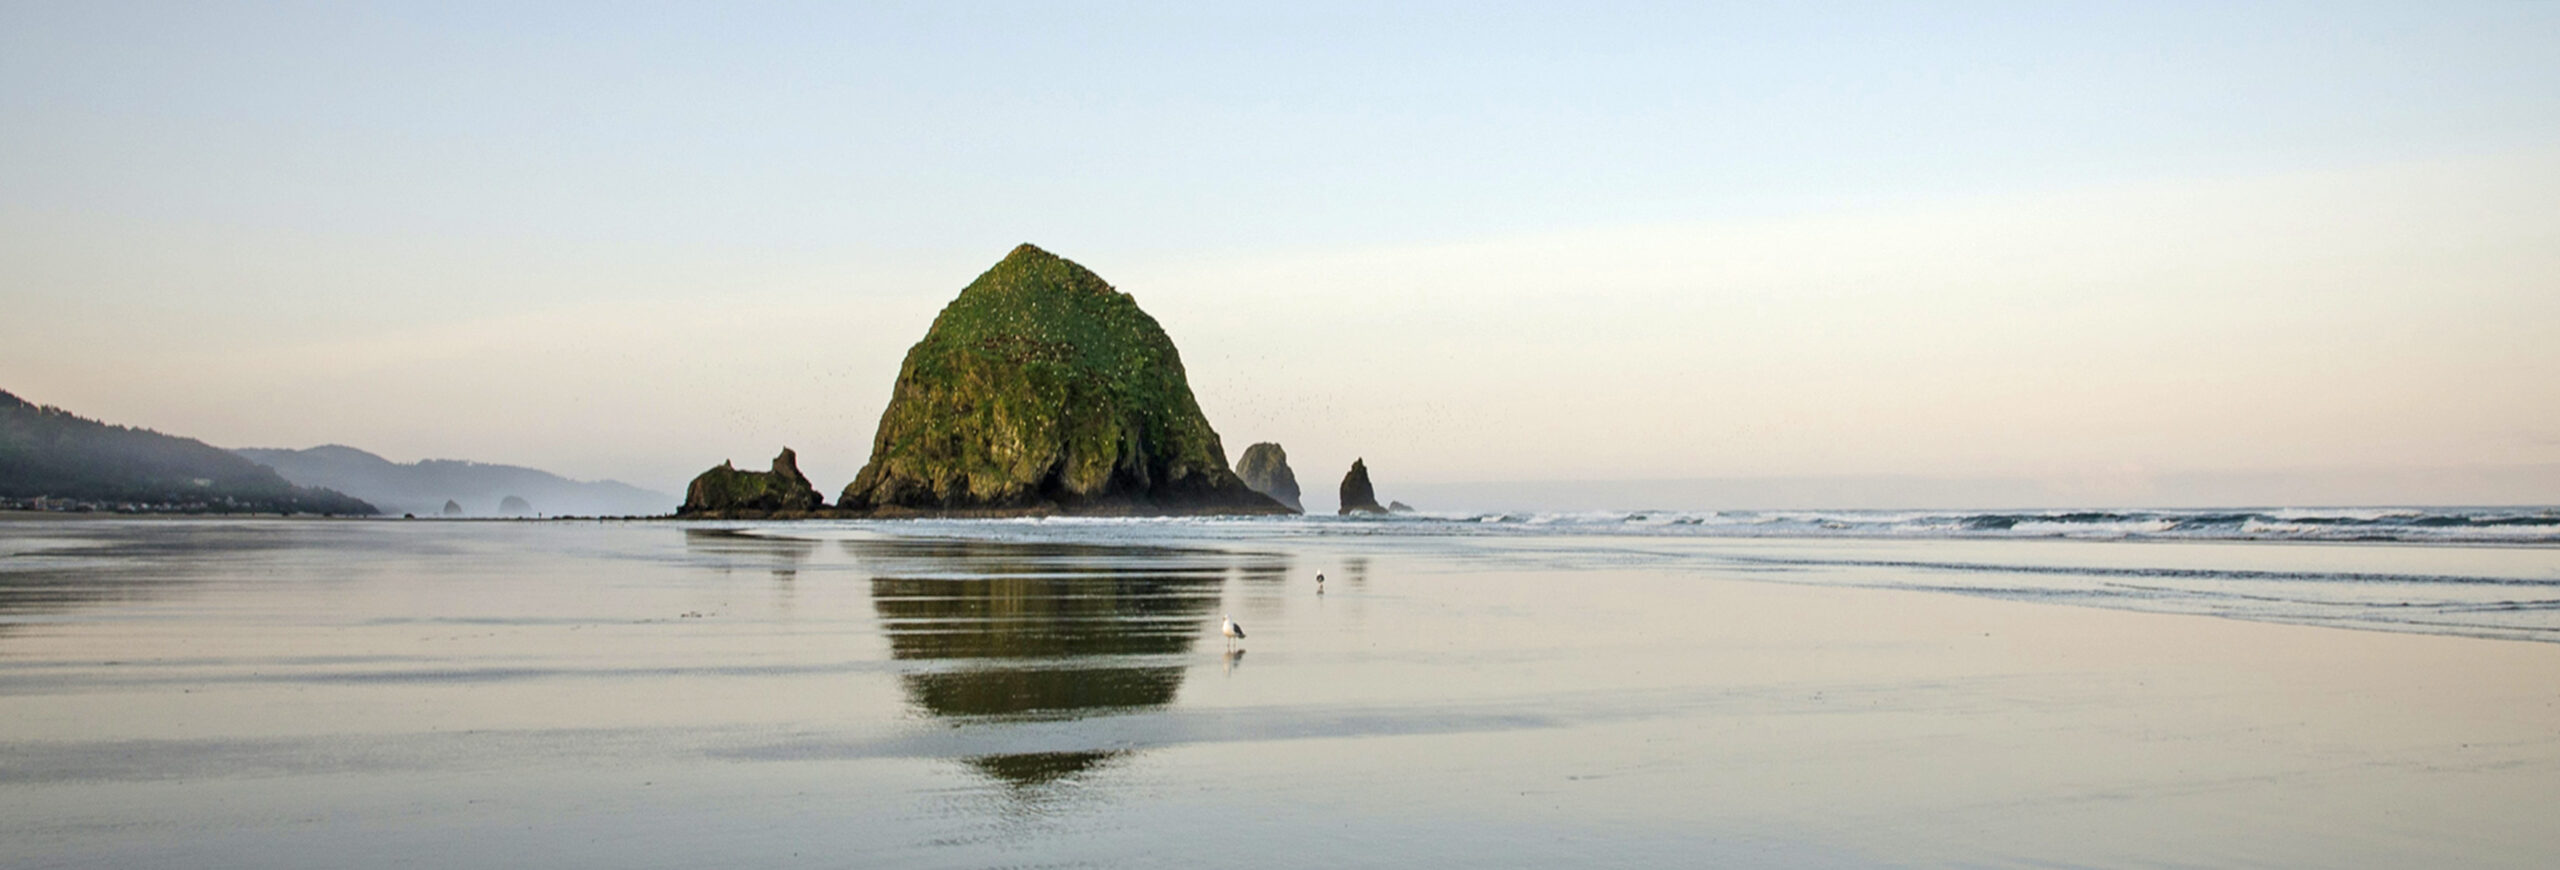 A peaceful scene of Haystack Rock at Cannon Beach, Oregon.